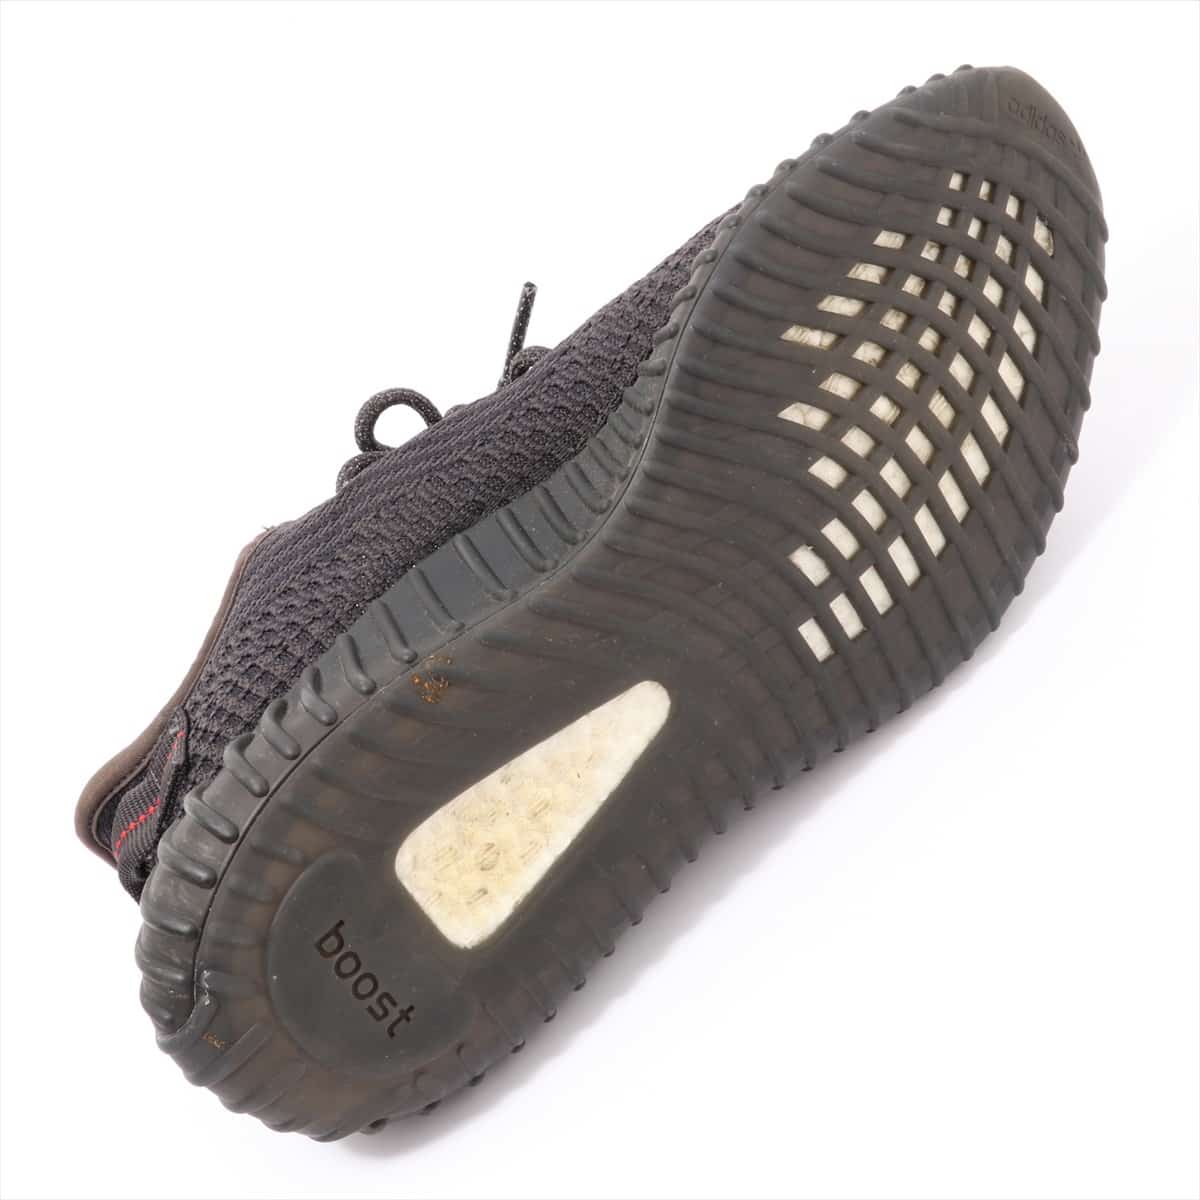 Adidas YEEZY BOOST 350 V2 Knit Sneakers 27.5cm Men's Grey